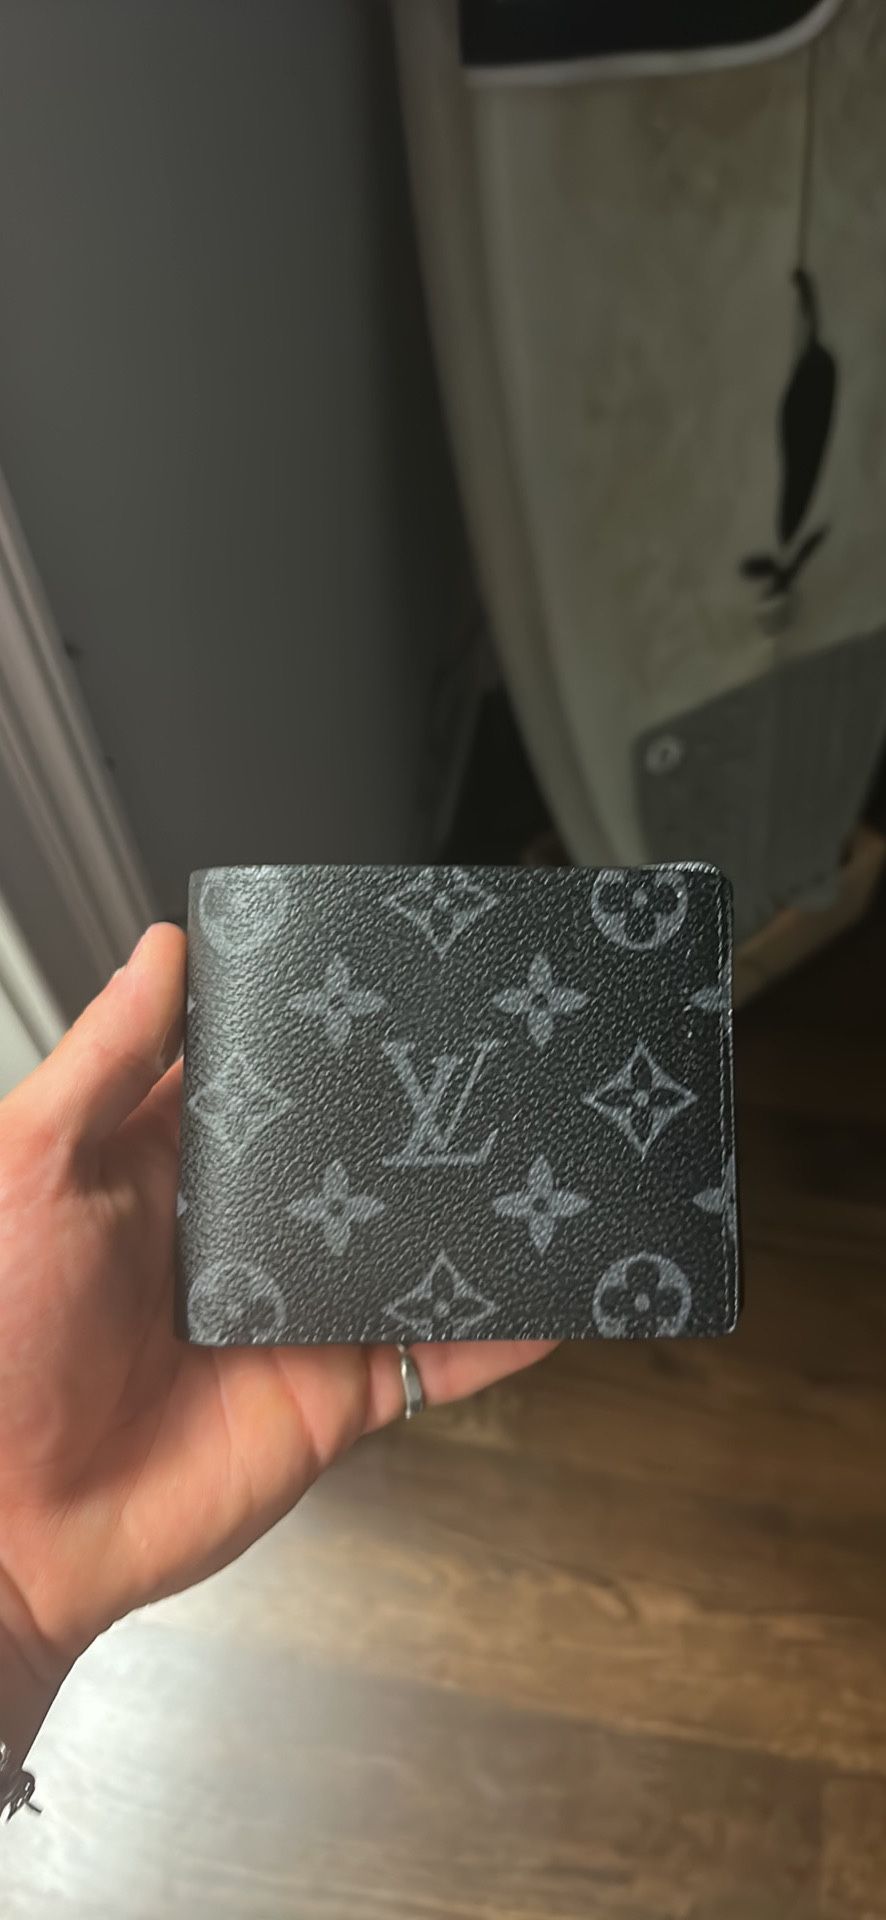 Louis Vuitton Canvas Wallet for Sale in Atlanta, GA - OfferUp